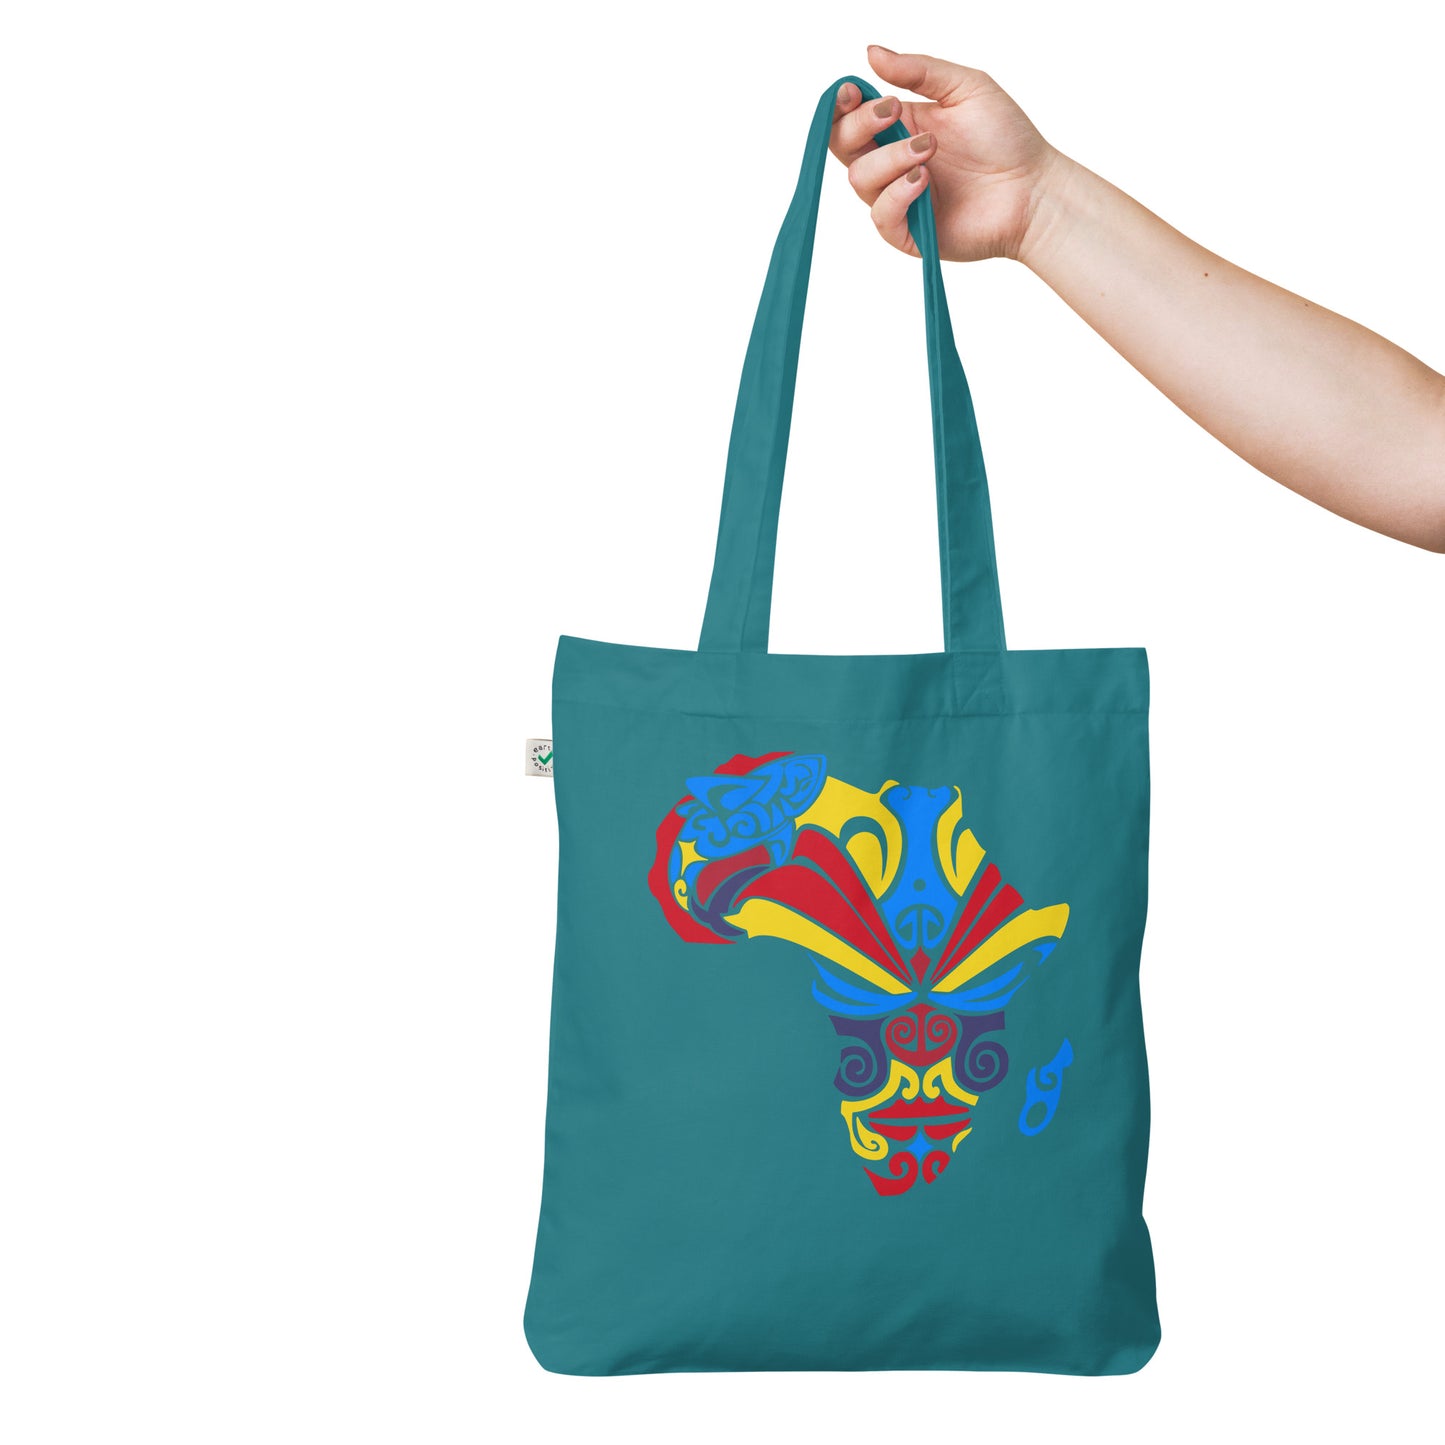 Organic Fashion Tote Bag - Banamerica Collection